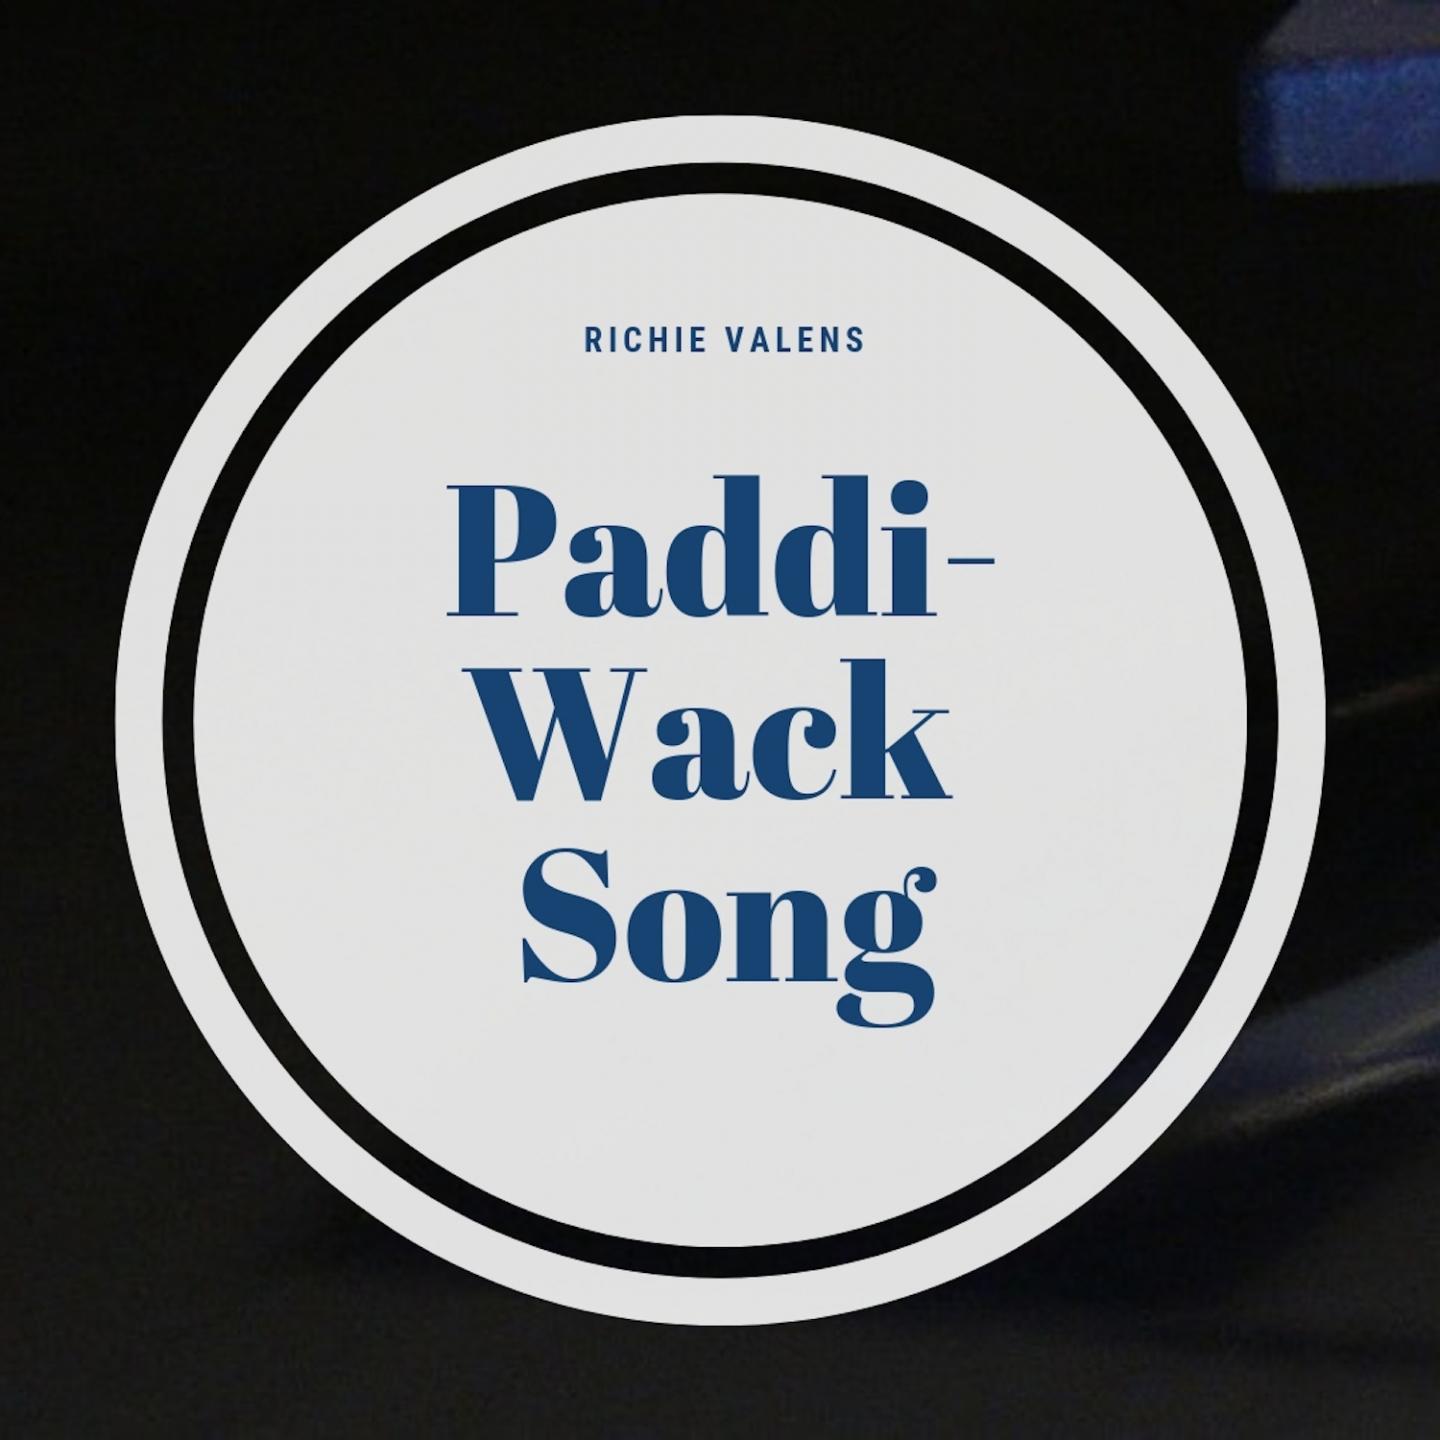 Paddi-Wack Song